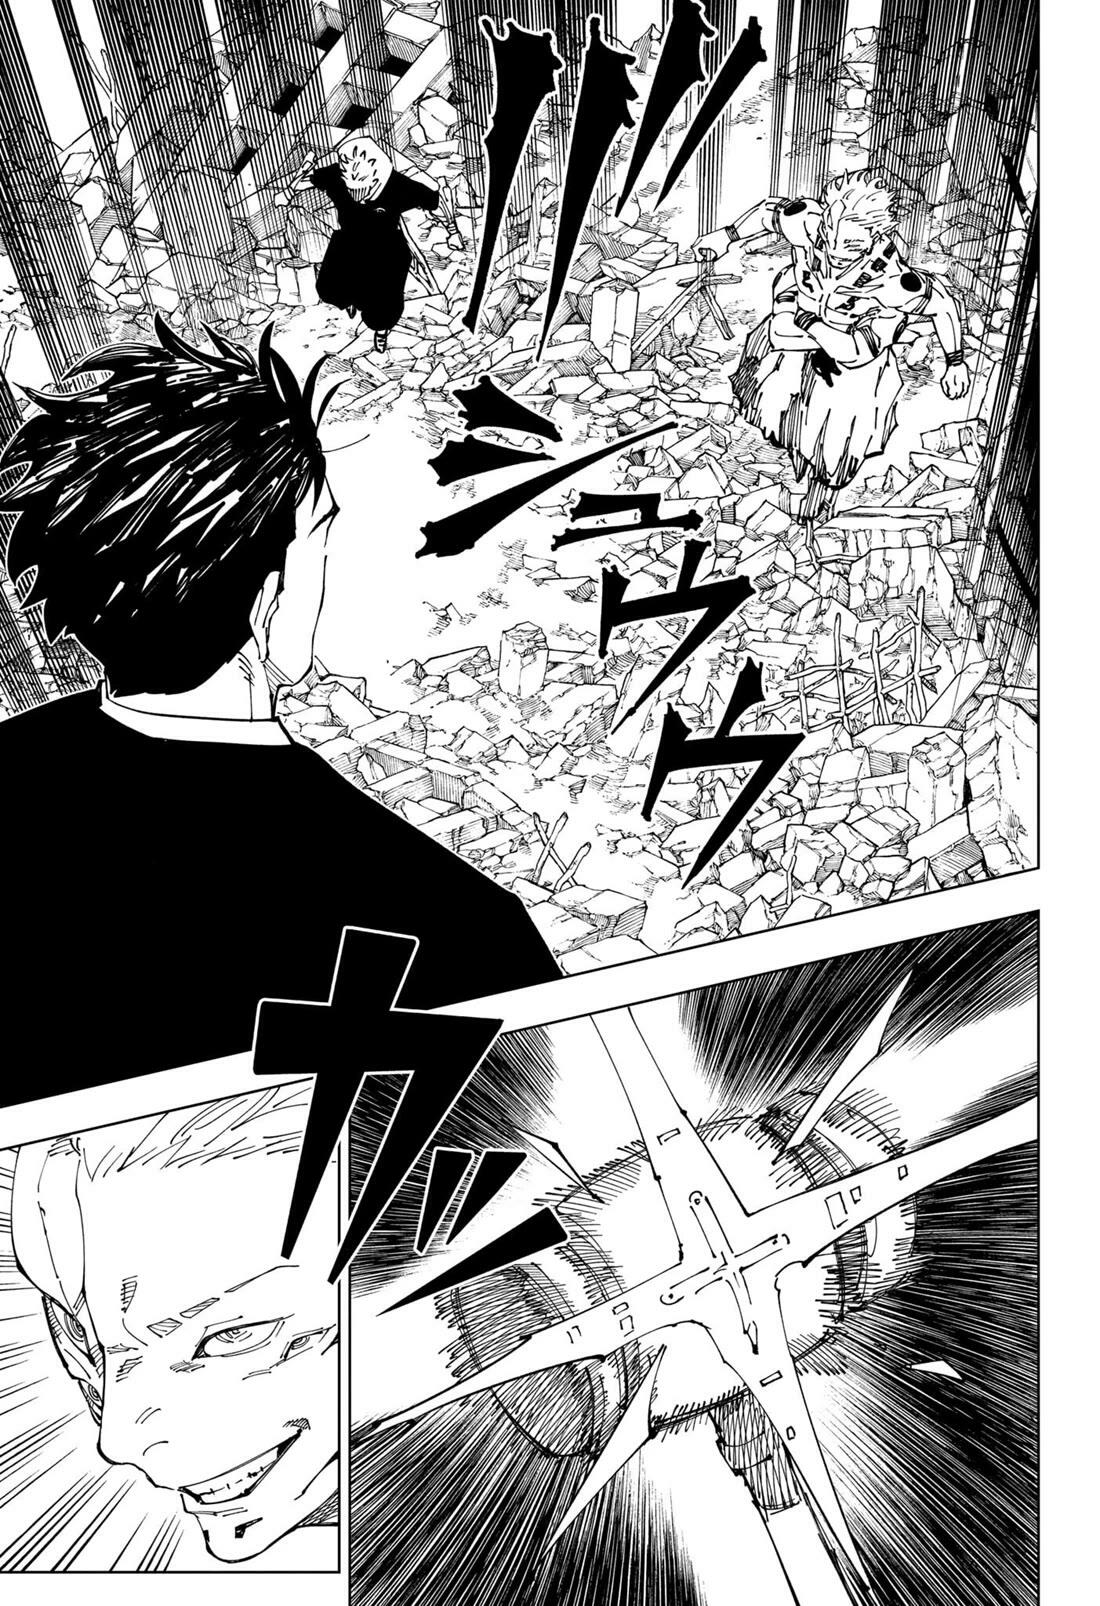 Jujutsu Kaisen Chapter 245: Chapter 245: The Decisive Battle In The Uninhabited, Demon-Infested Shinjuku ⑰ page 16 - Mangakakalot